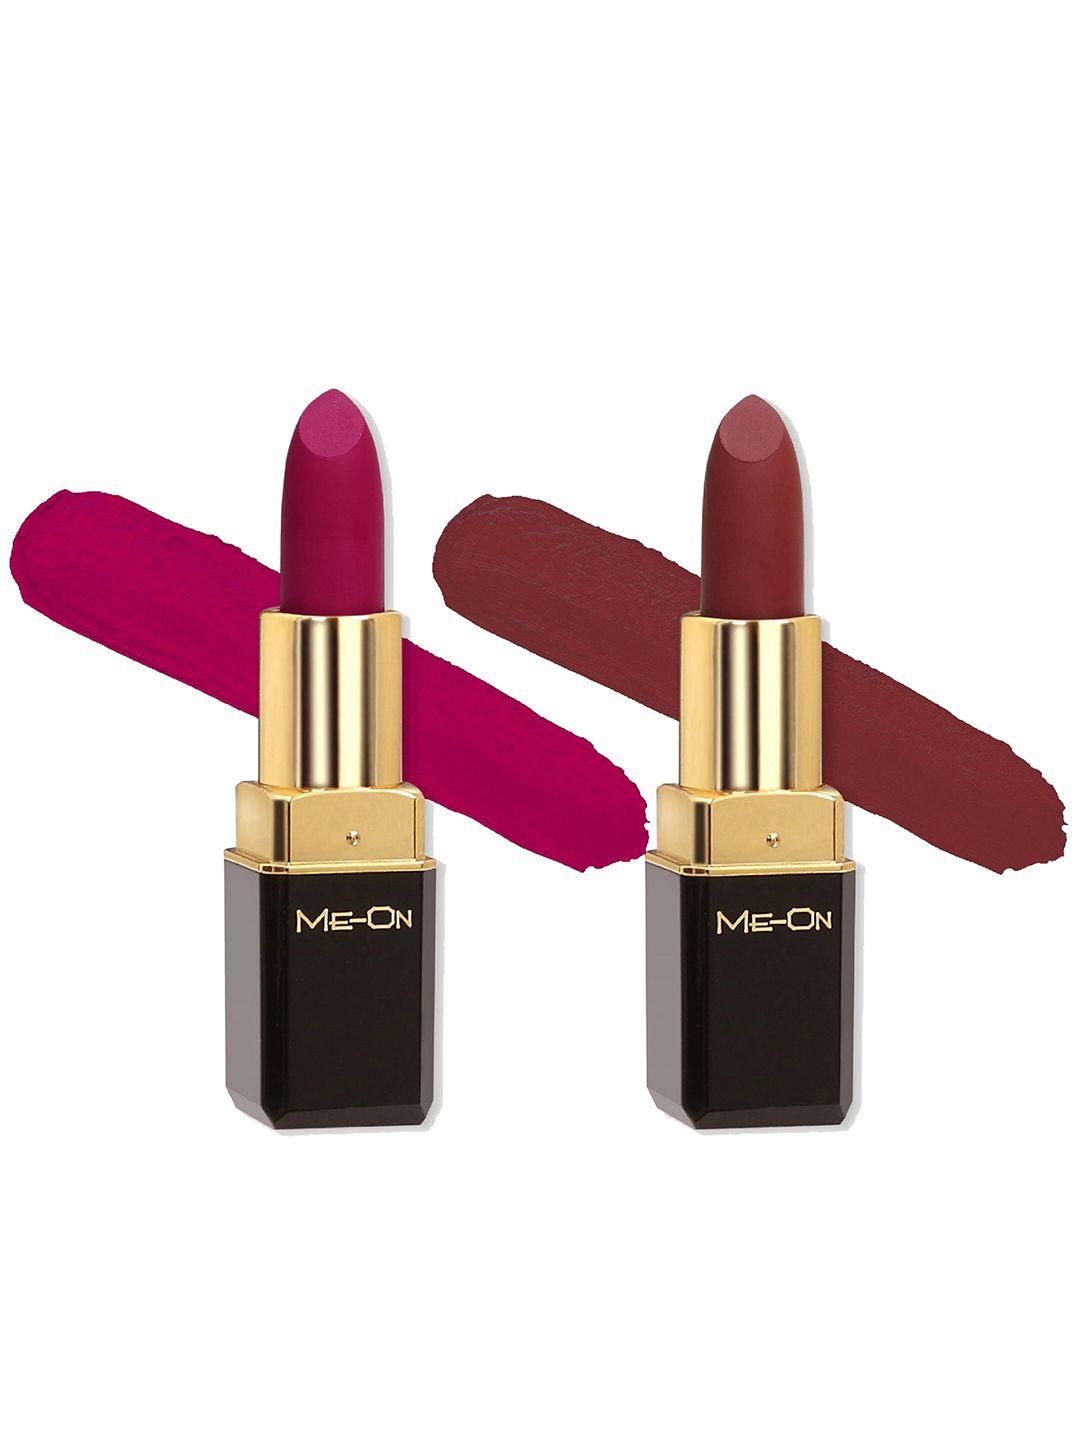 me-on color addict set of 2 8h long lasting hd matte lipsticks-shade 10-shade 16